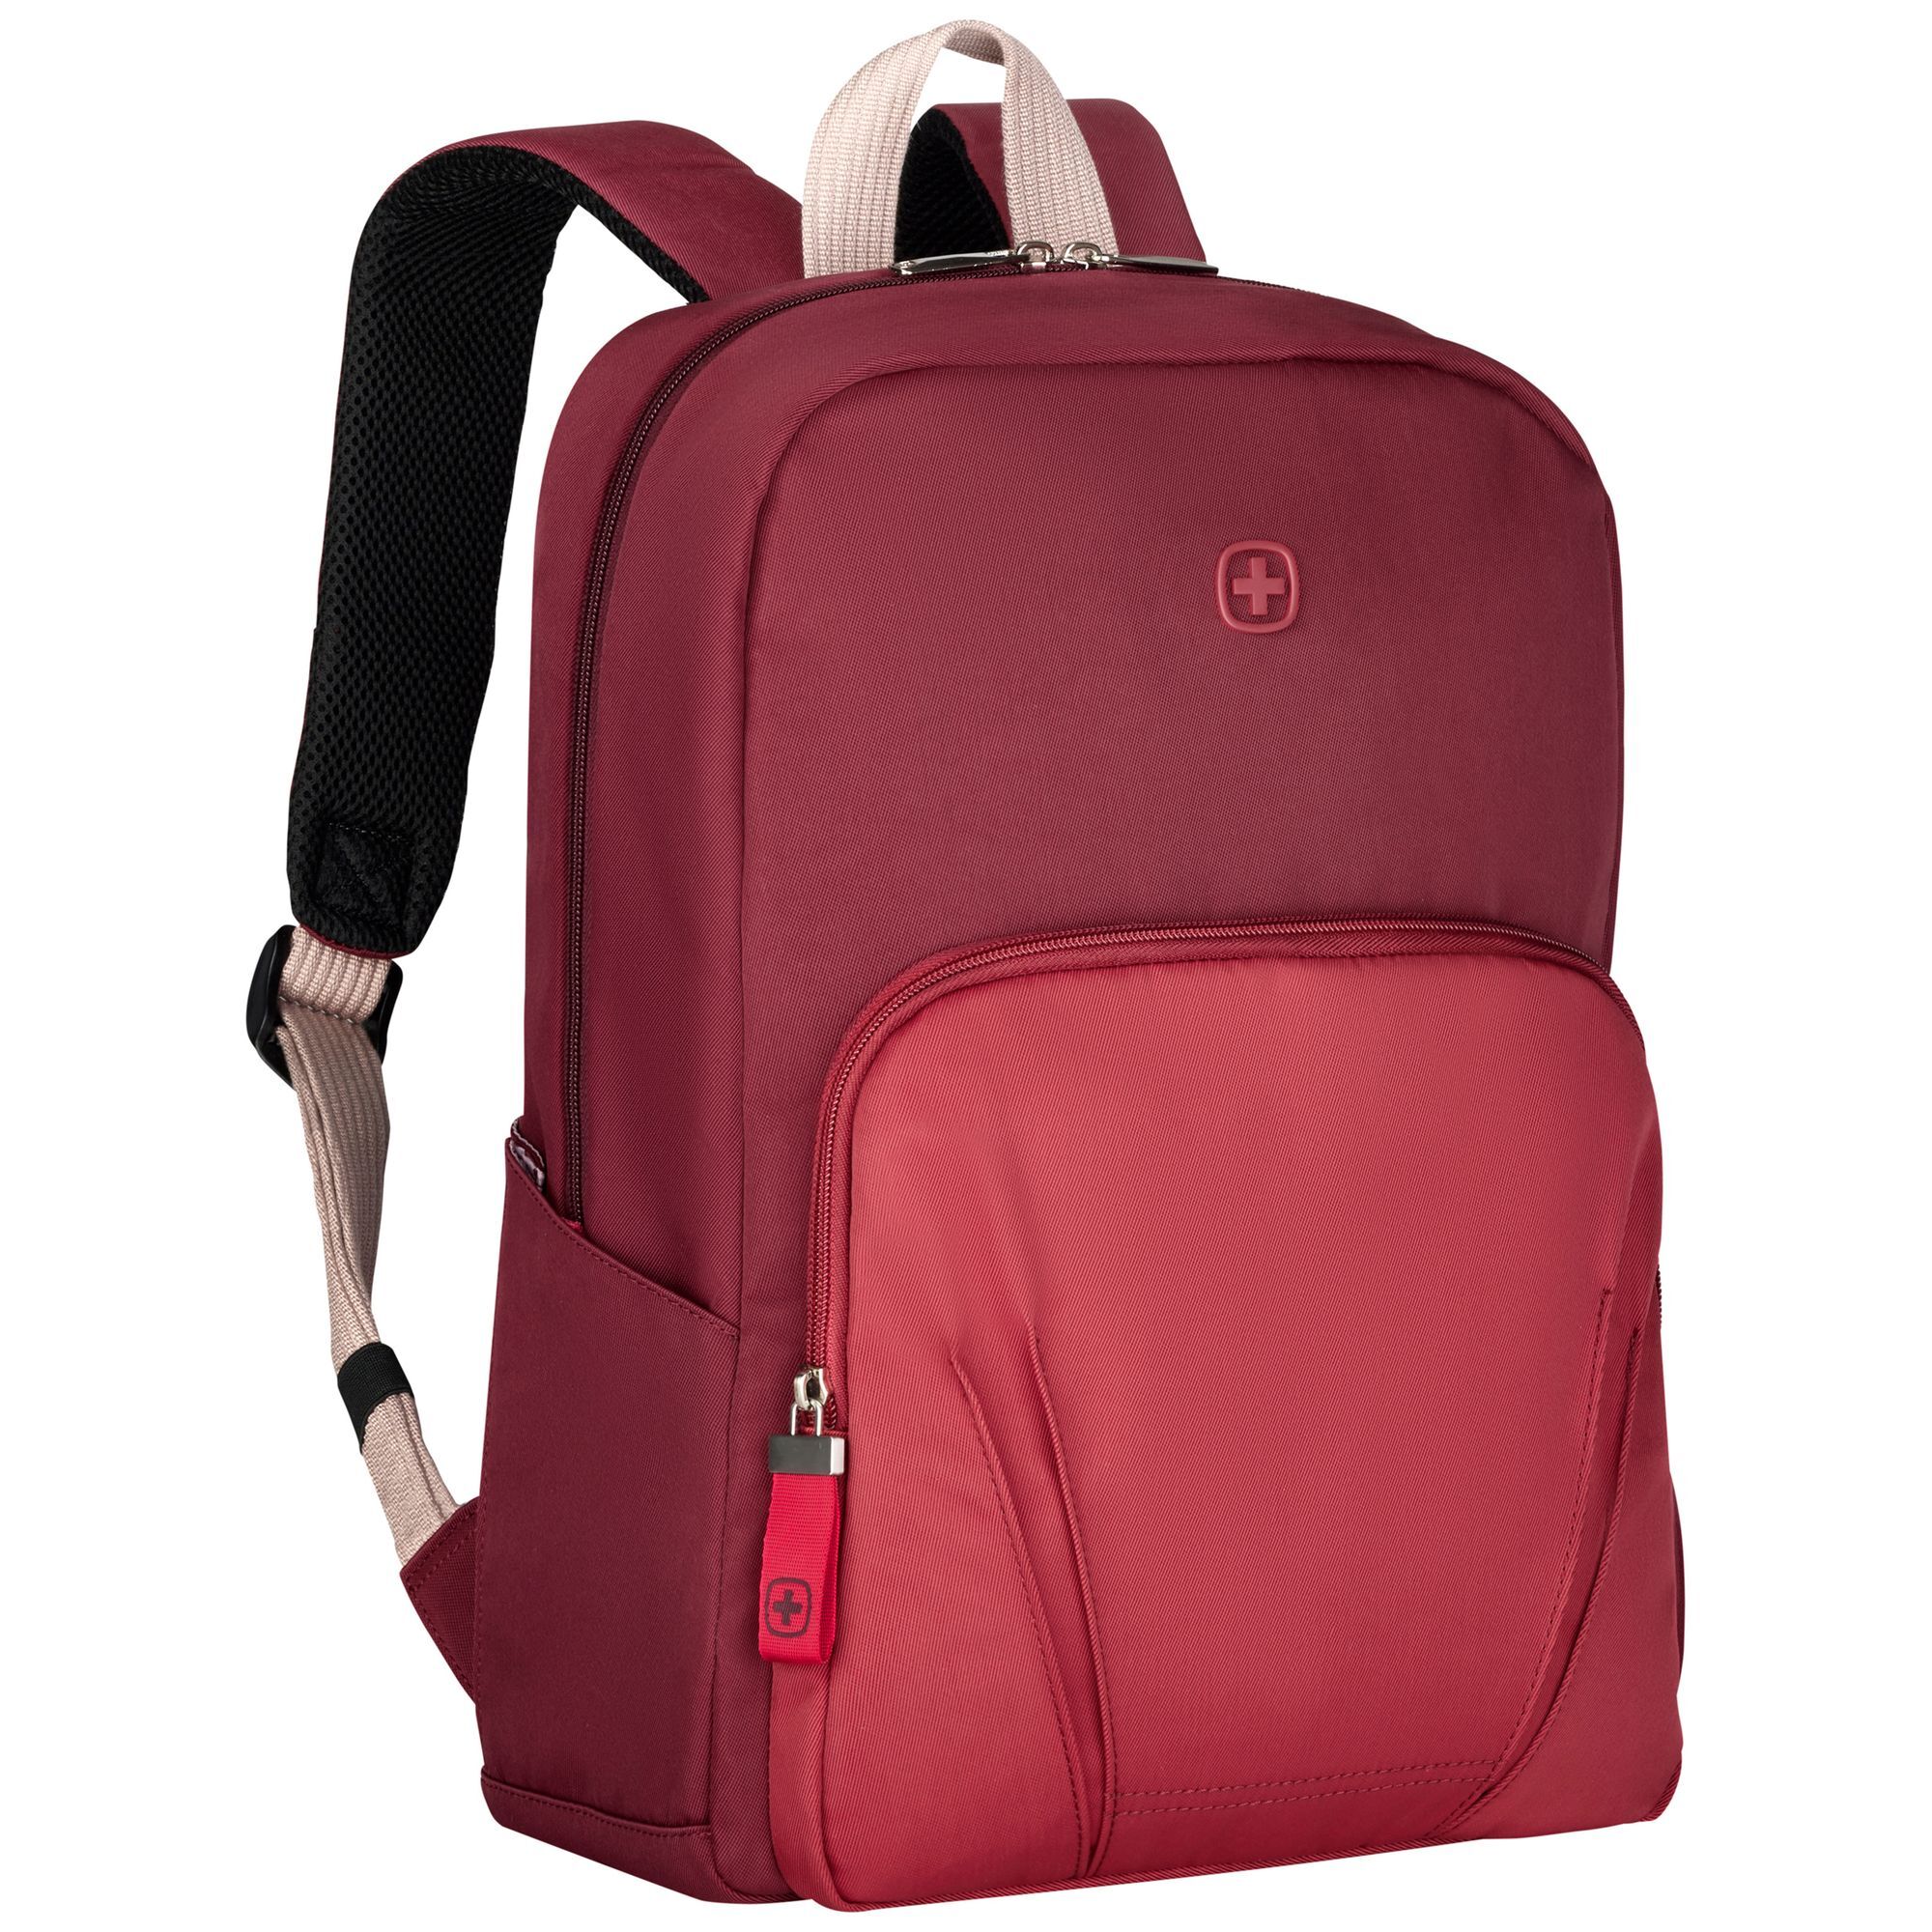 Рюкзак Wenger Motion 42 cm Laptopfach, цвет digital red рюкзак wenger mx reload 14 42 cm laptopfach цвет heather grey